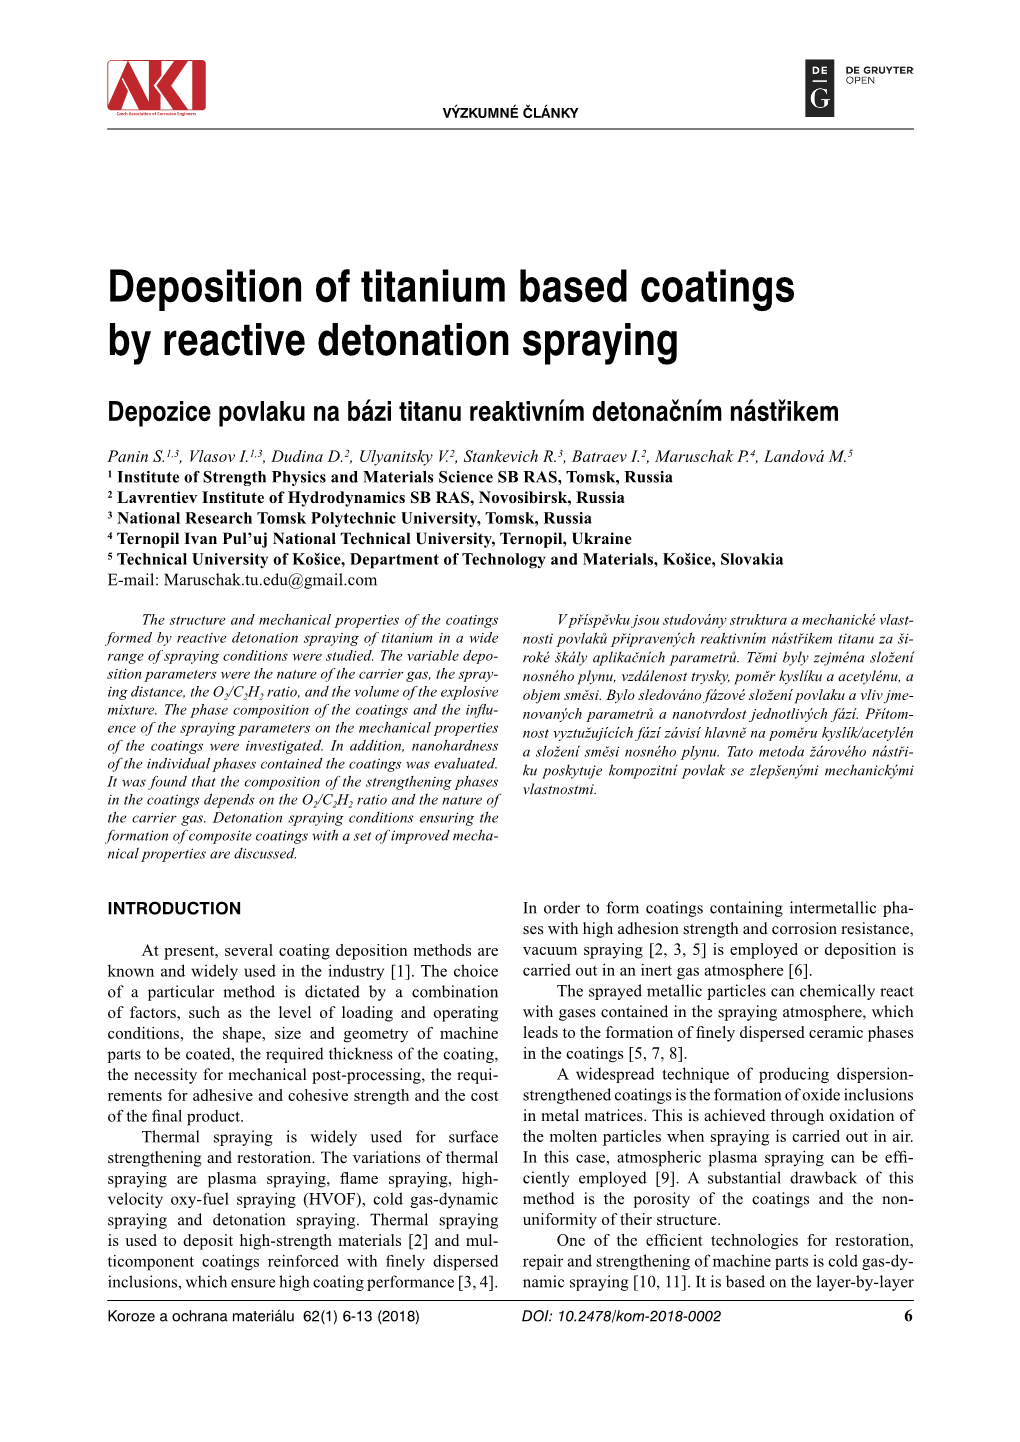 Deposition of Titanium Based Coatings by Reactive Detonation Spraying